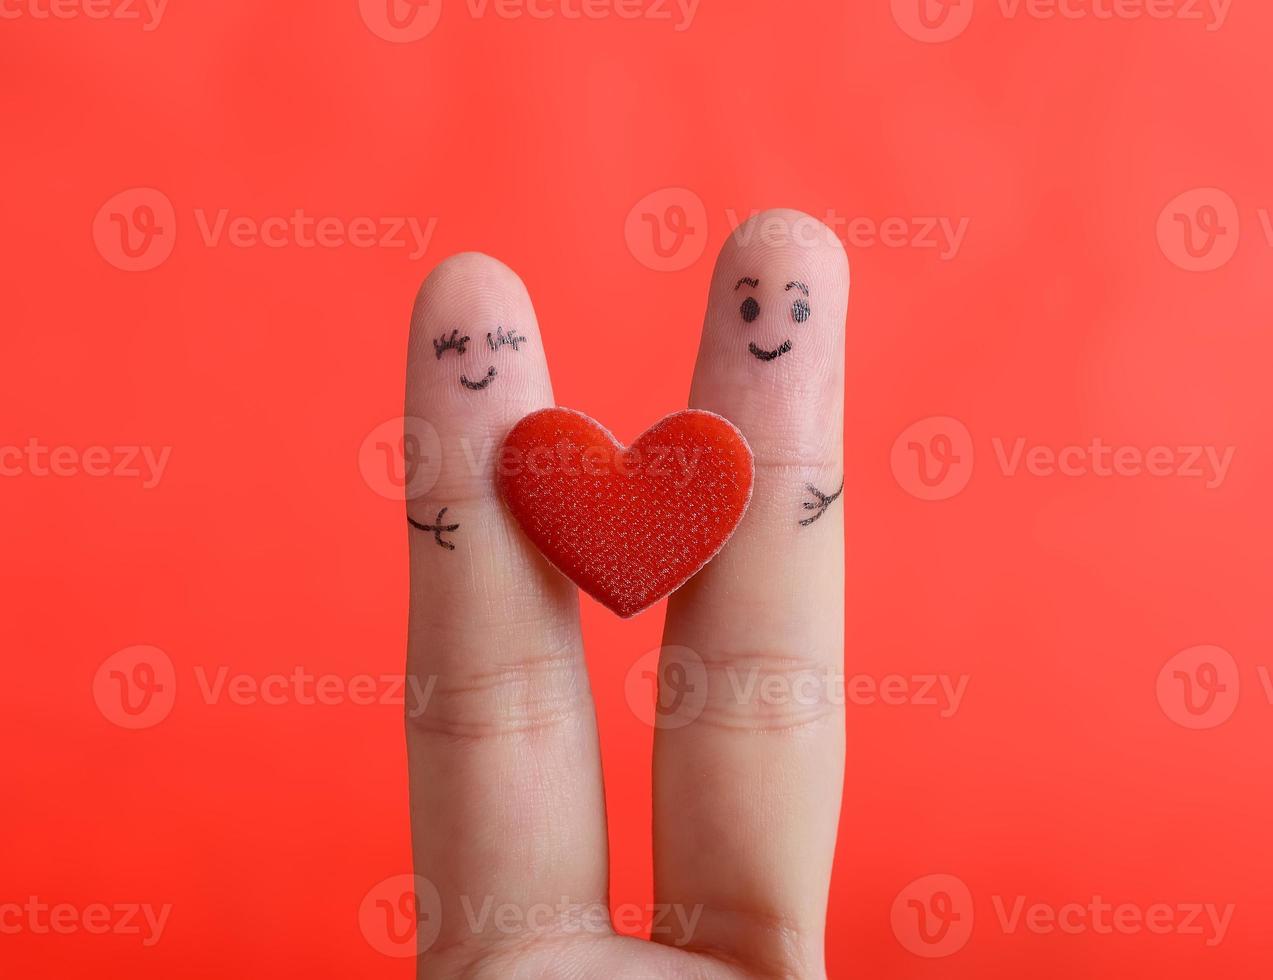 sonriente dedo pintado sobre fondo rojo, concepto de San Valentín. foto